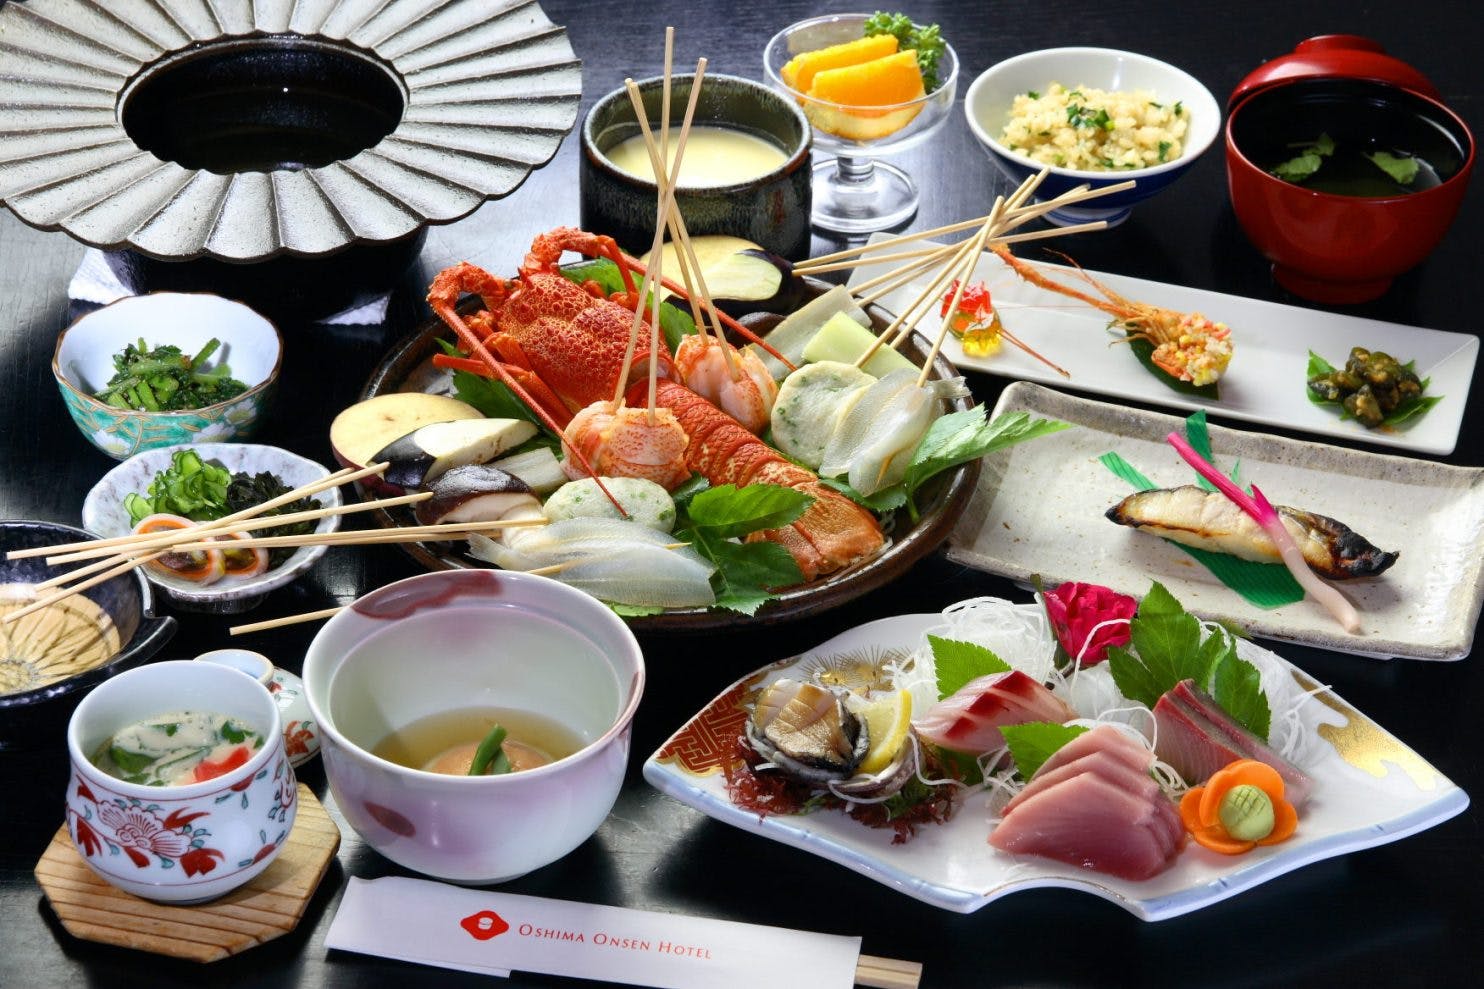 Oshima onsen hotel, dinner, accommodation, tsubaki oil Fondue, seafoods, oshima, izuoshima, tokyo, japan, tokyoislands, izuislands